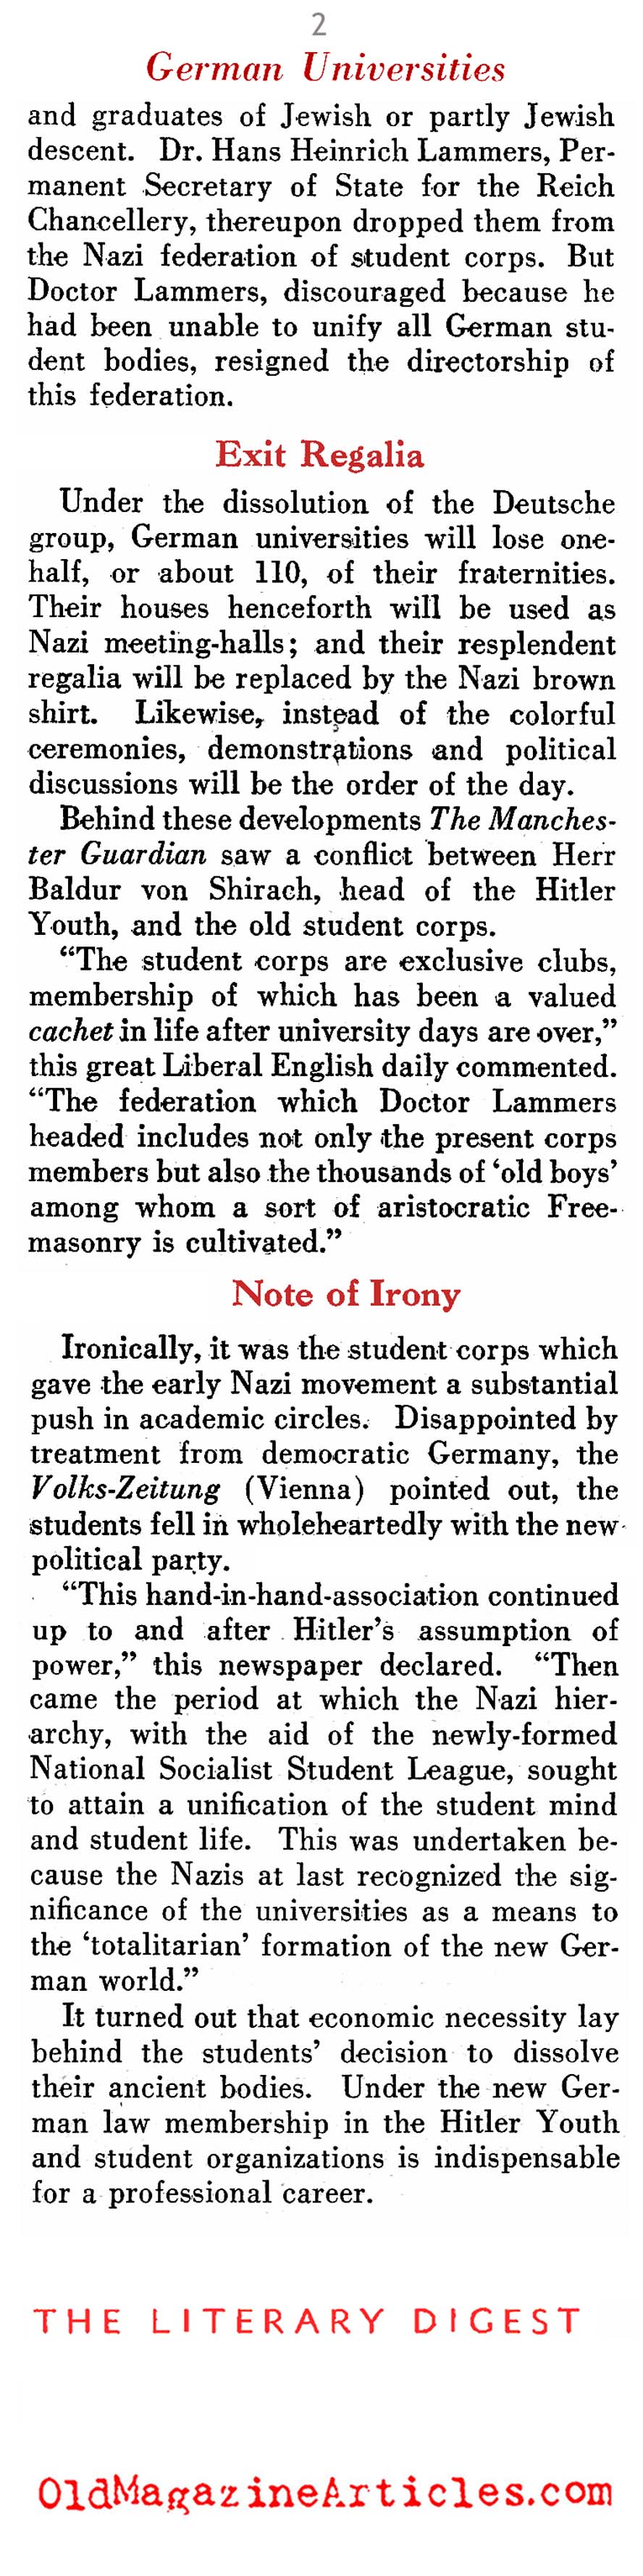 The Universities Under Hitler (Literary Digest, 1935)